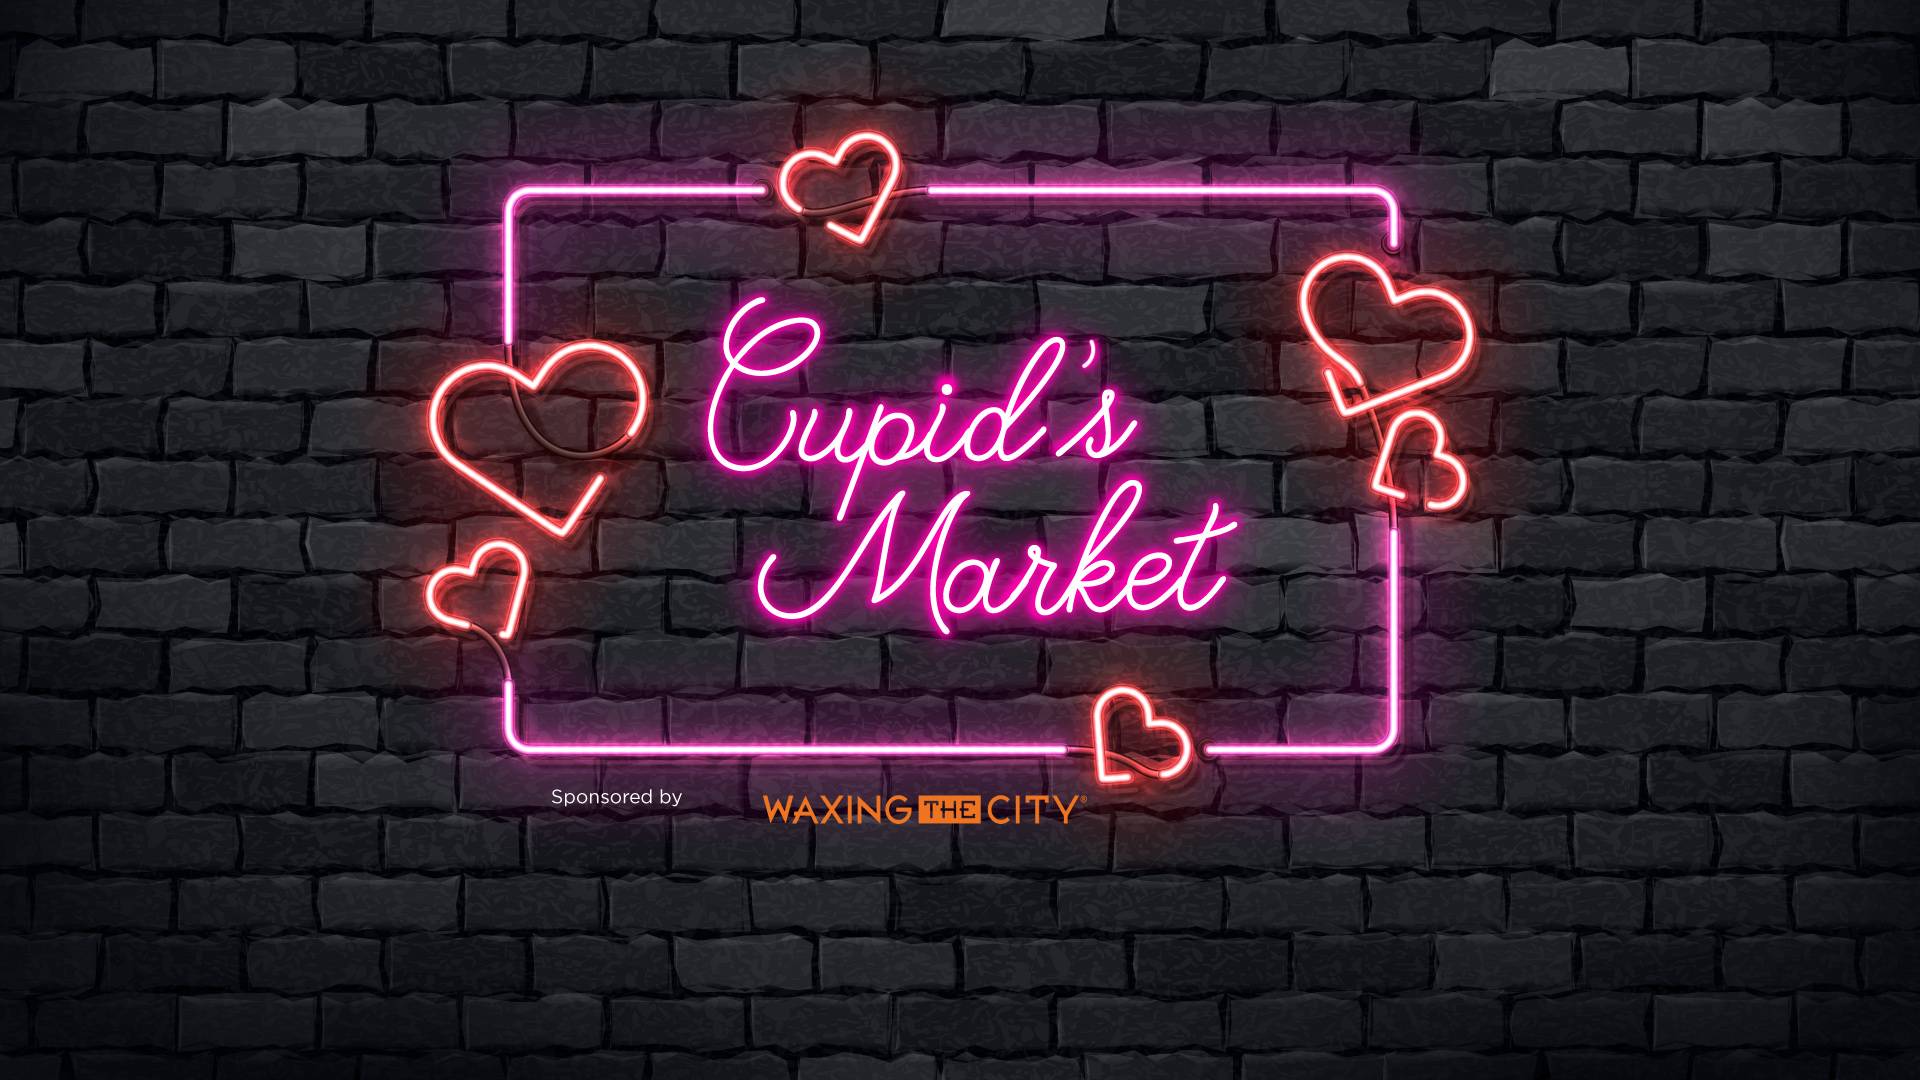 Cupid's Market event logo